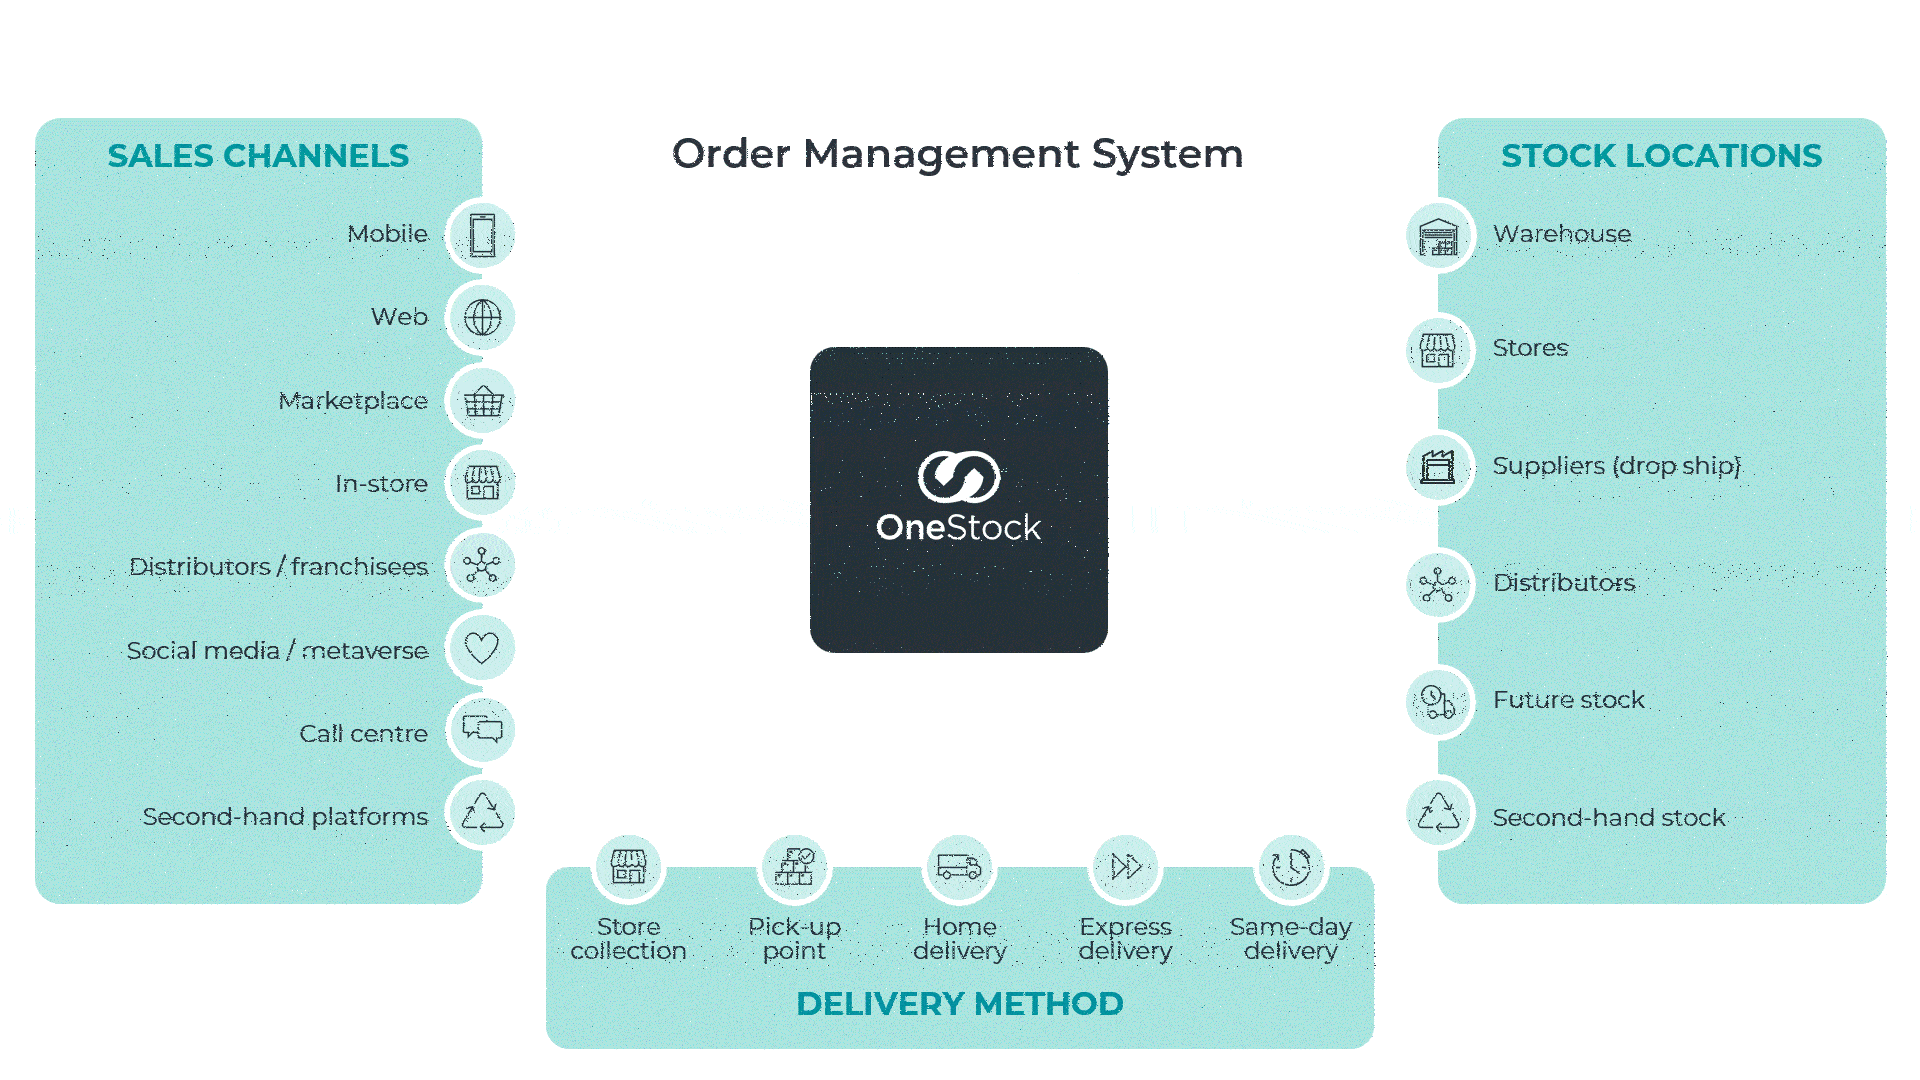 Order management sytem and order routing